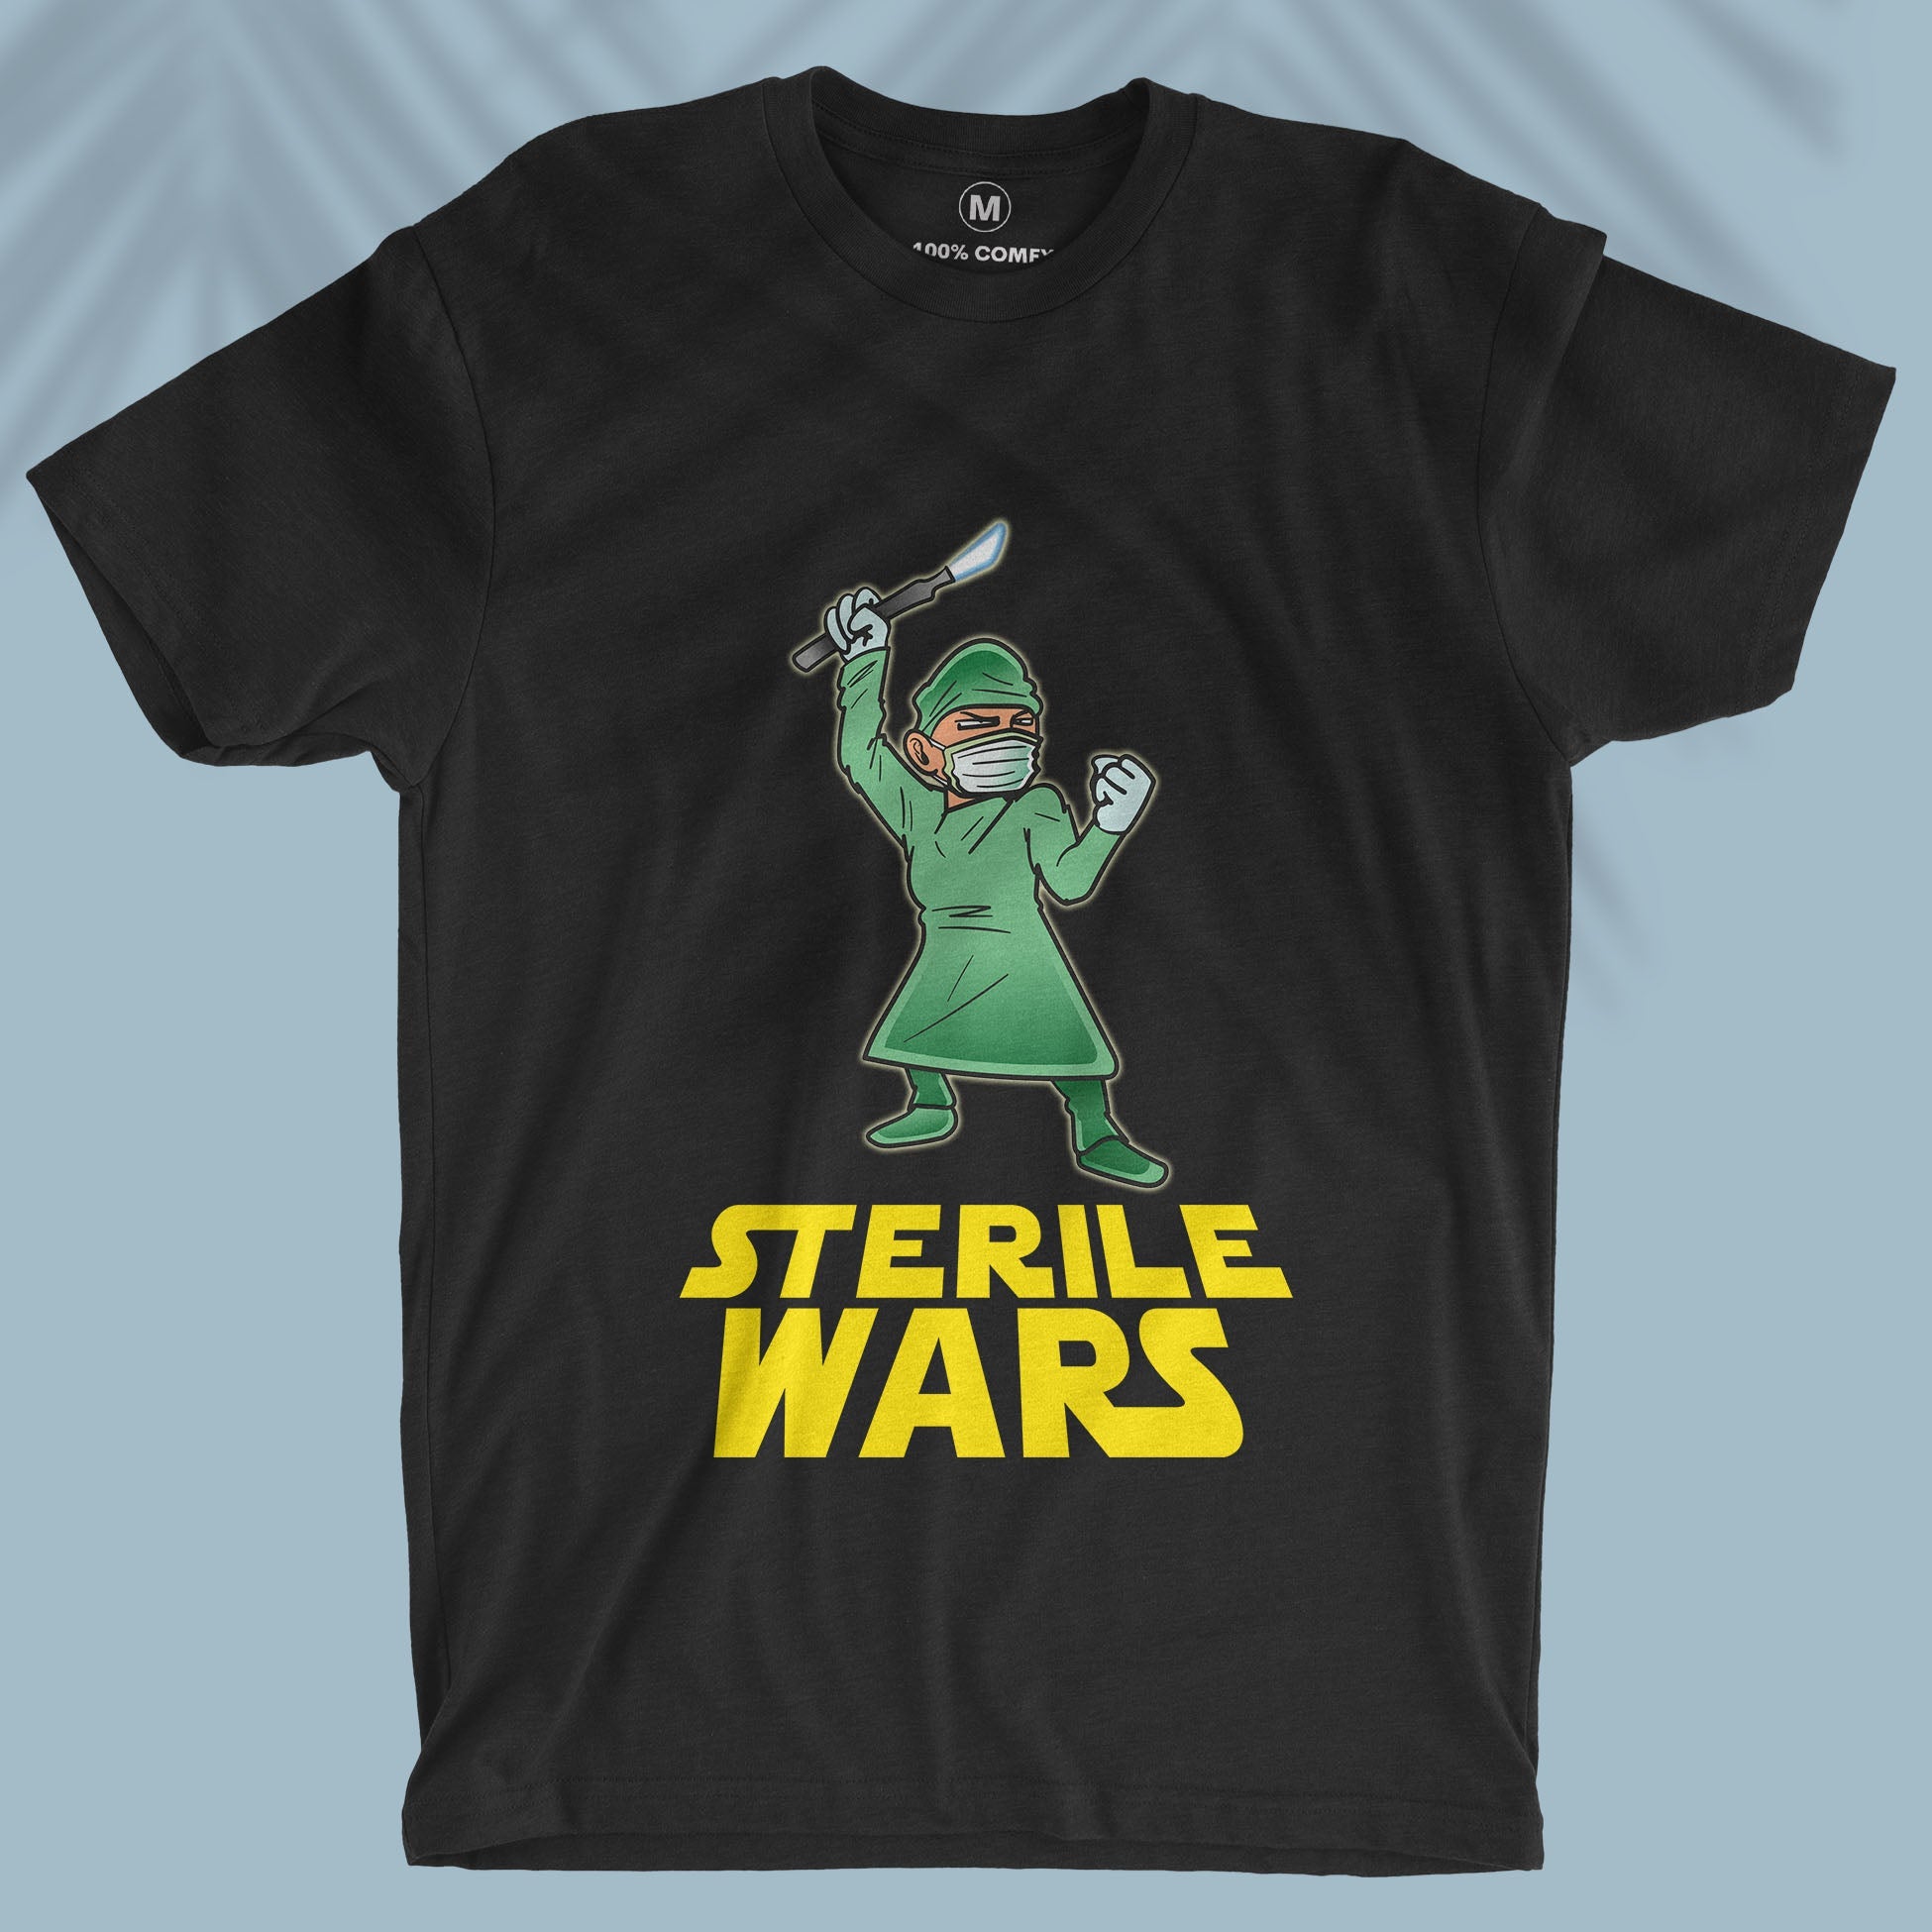 Sterile Wars - Unisex T-shirt